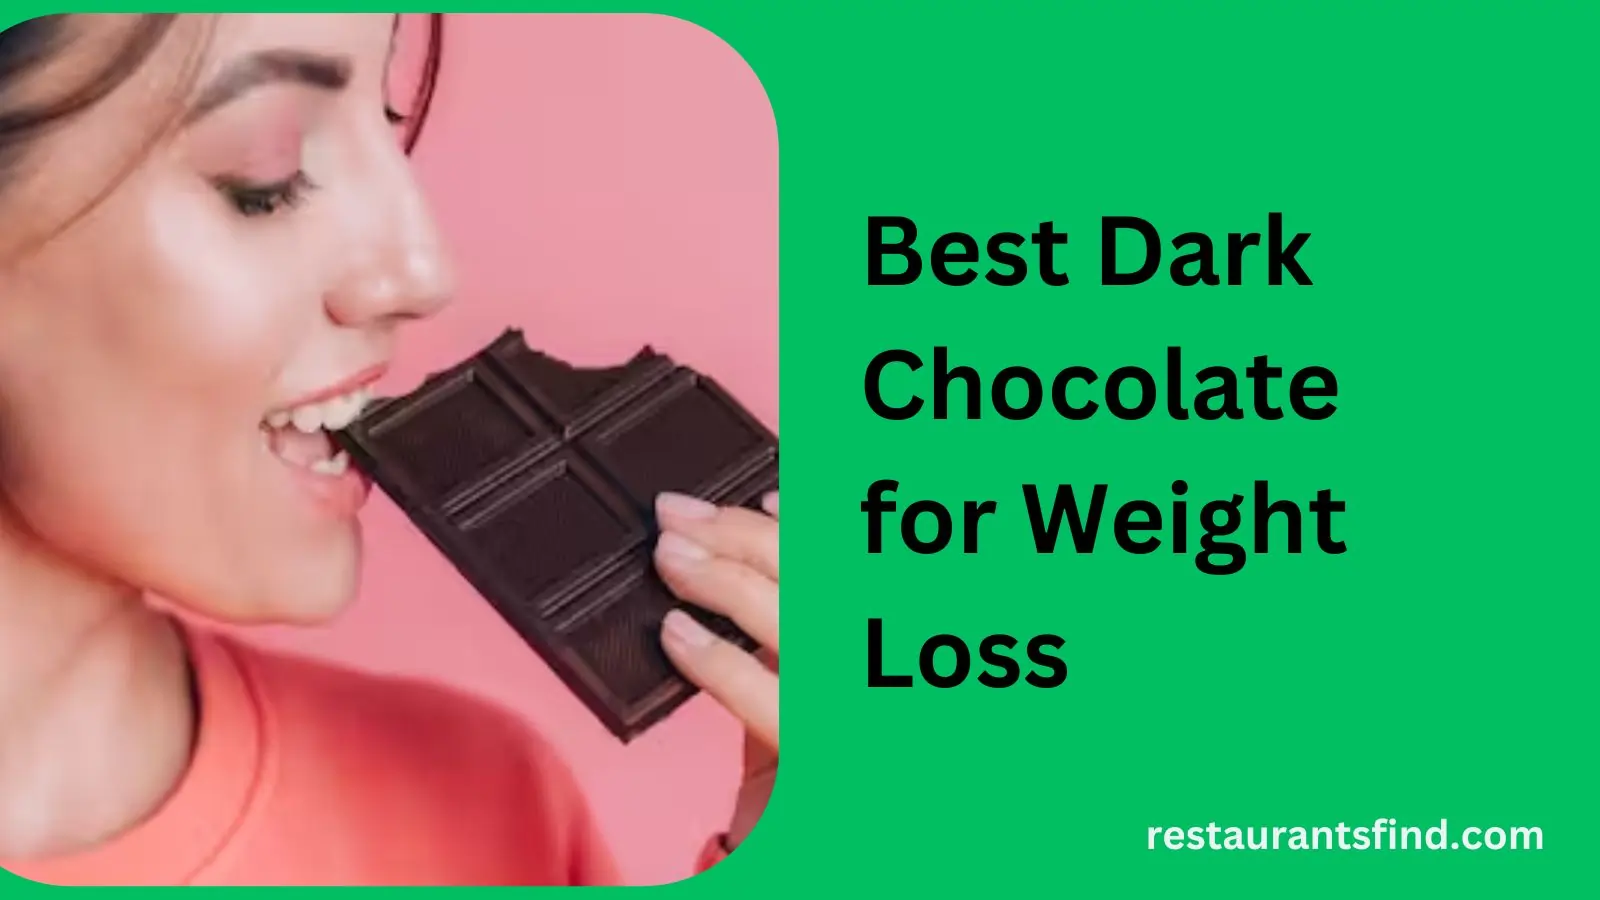 Best Dark Chocolate for Weight Loss